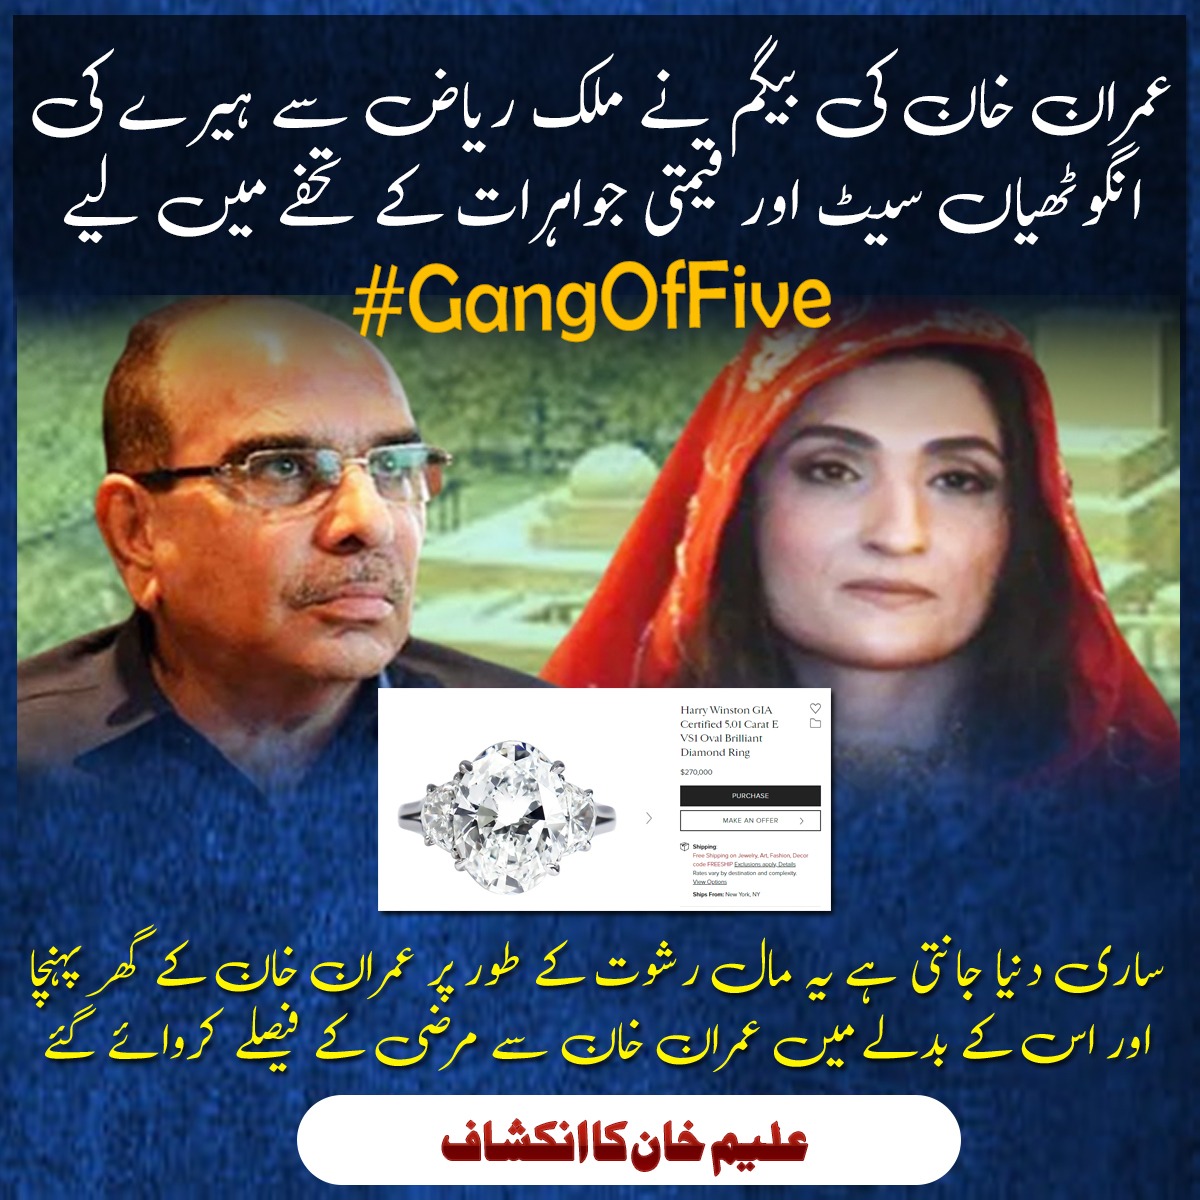 #GangOfFive
FIA registers money laundering case against Farah Gogi